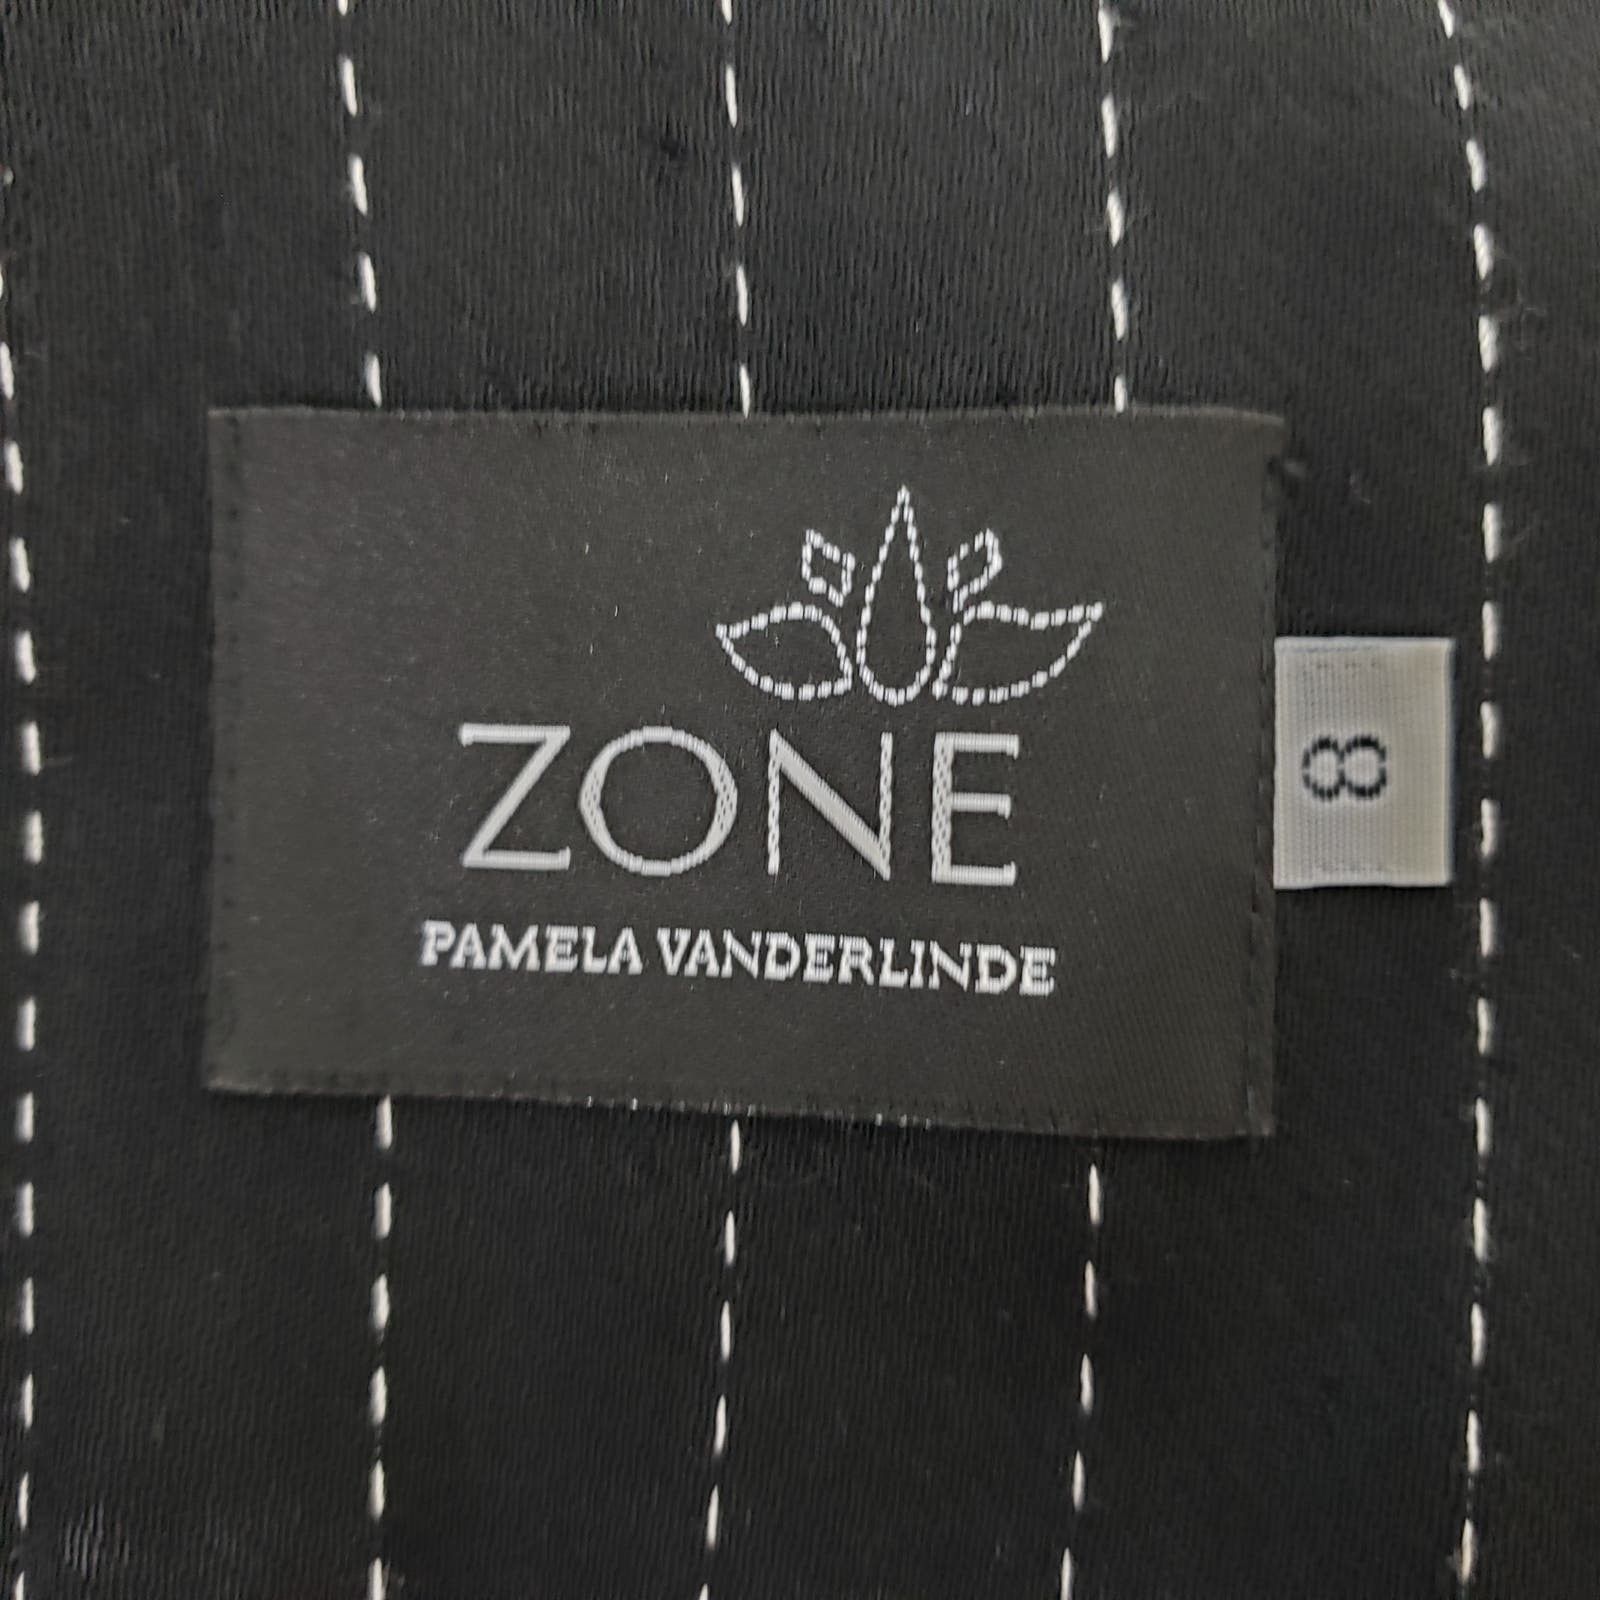 Vintage Pamela Vanderlinde Zone Blazer Jacket Pinstriped Ruffled 8 Size M / US 6-8 / IT 42-44 - 12 Thumbnail